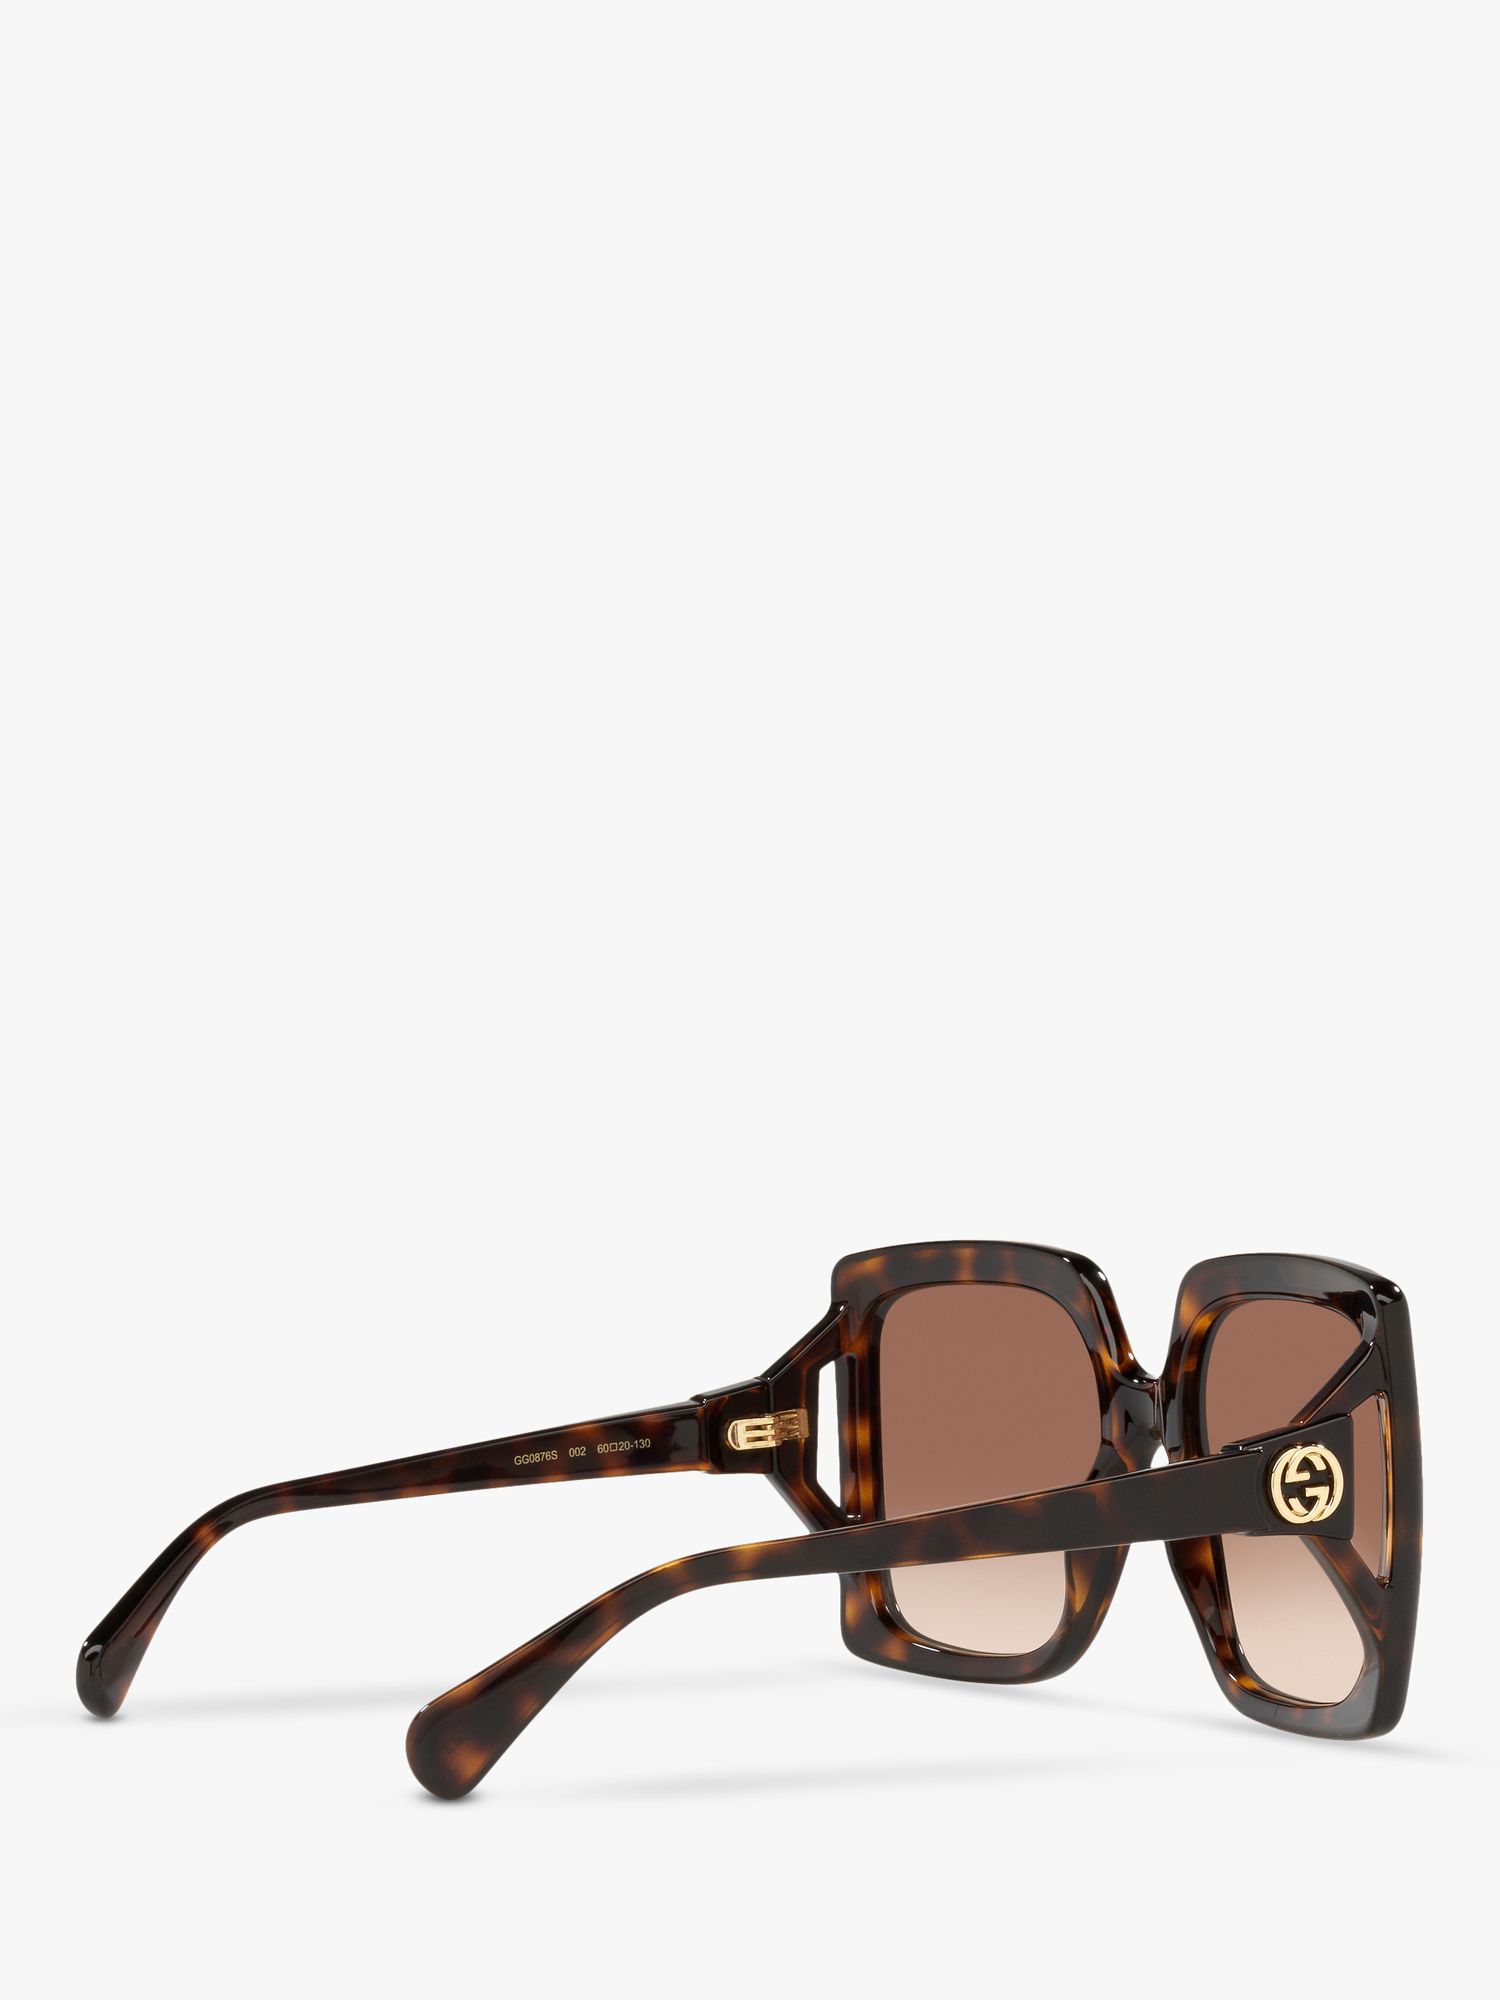 Gucci GG0876S Women's Chunky Square Sunglasses, Tortoise/Brown Gradient